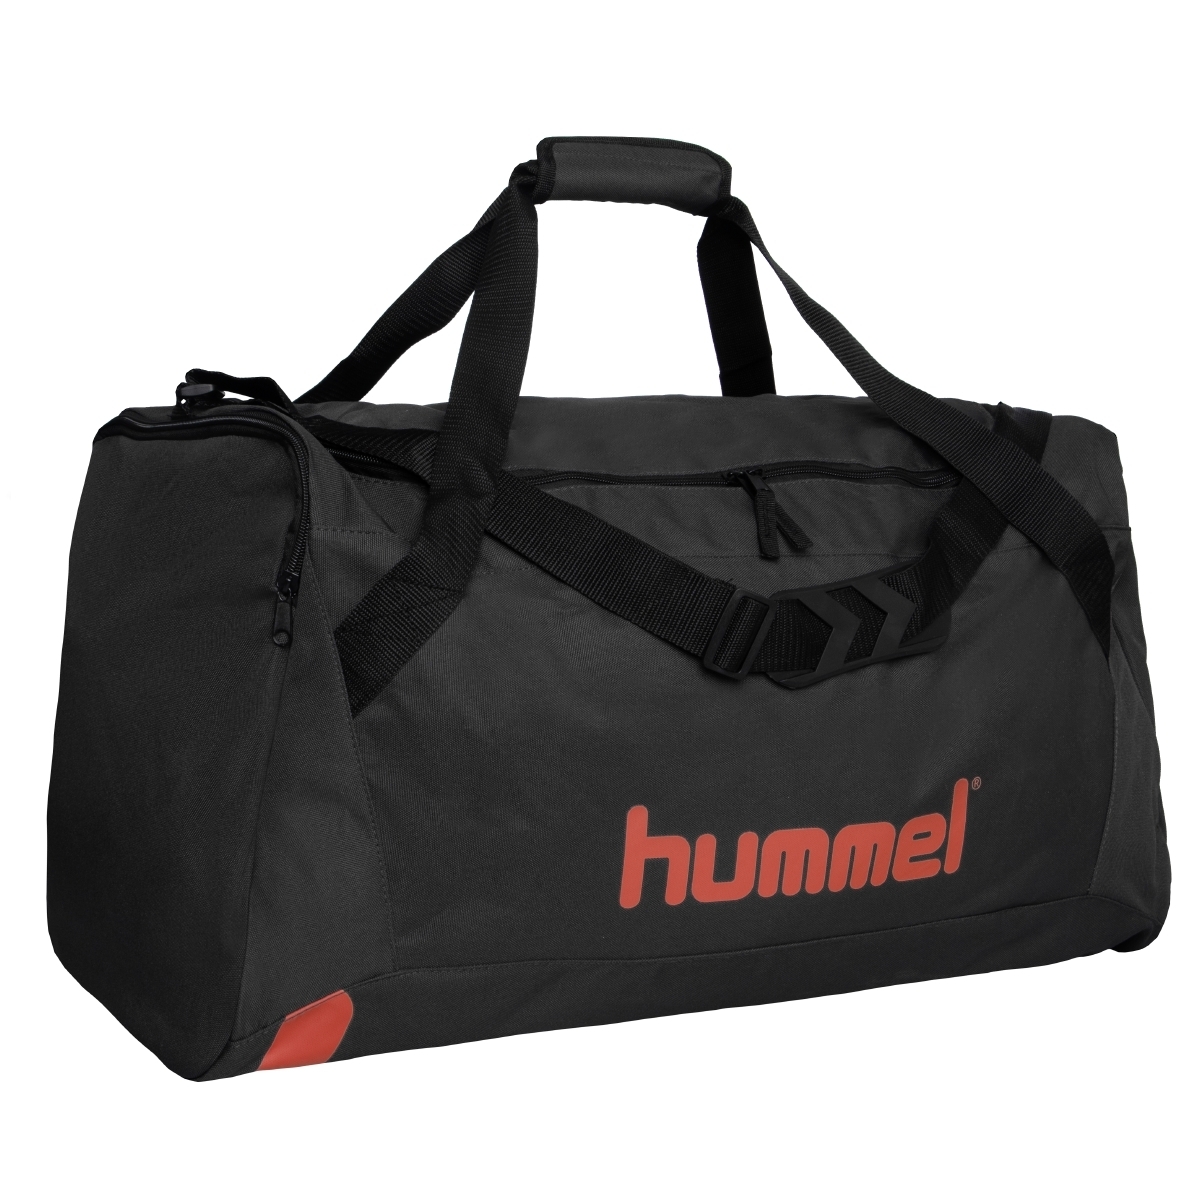 Hummel Action Sports Bag Sporttasche